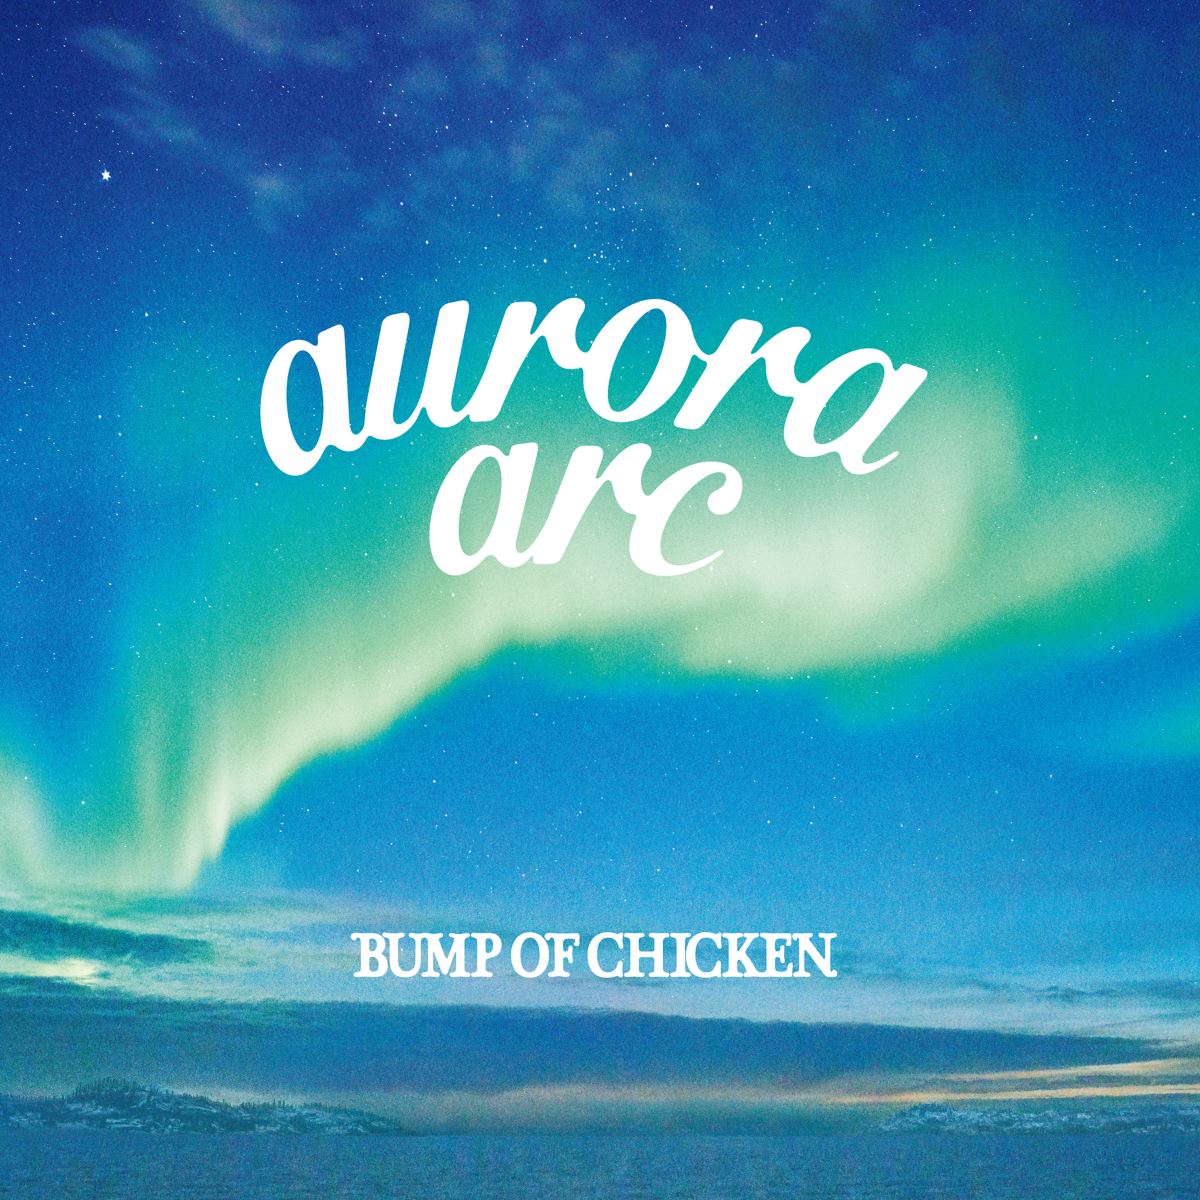 Cover for『BUMP OF CHICKEN - Nagareboshi no Shoutai』from the release『aurora arc』